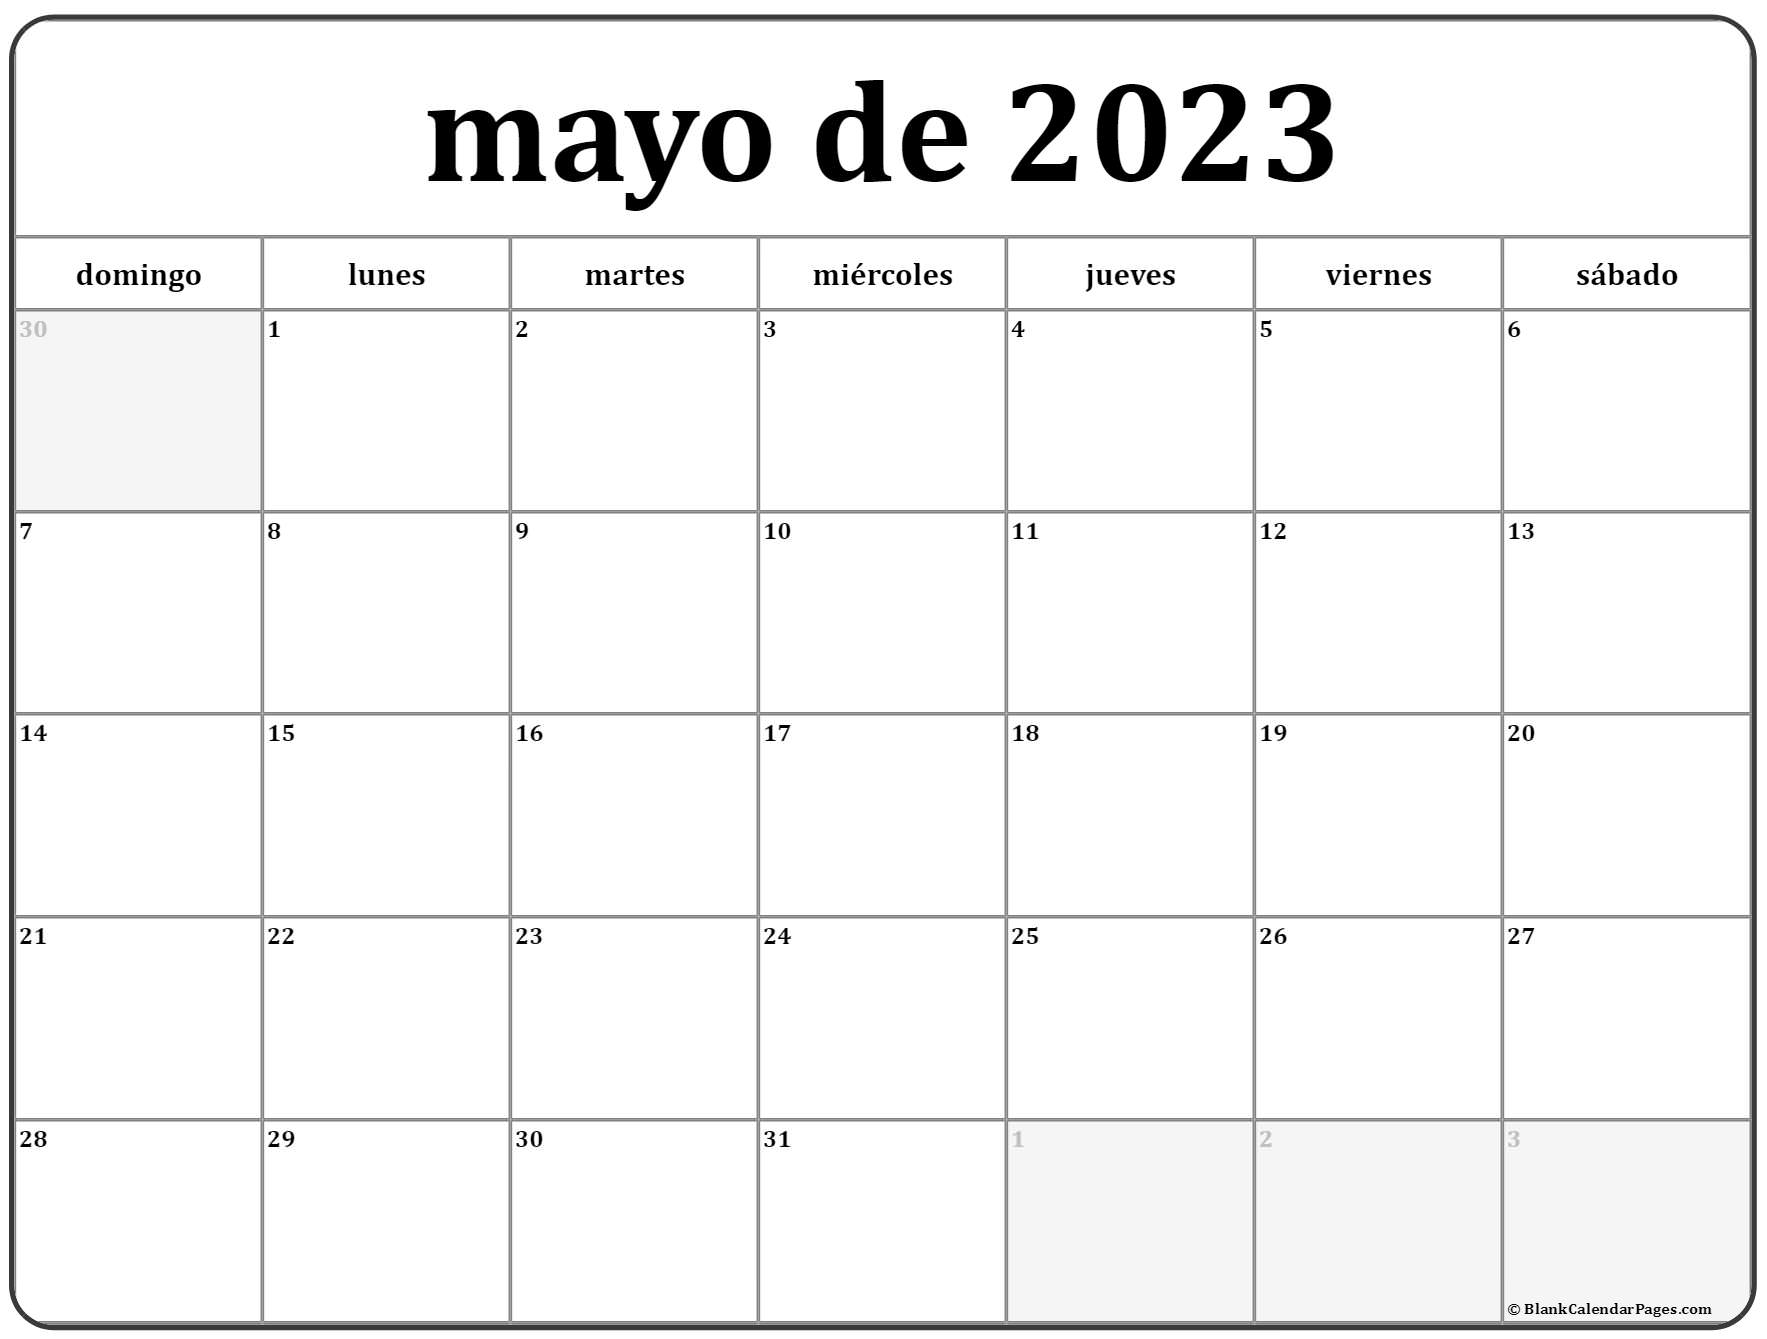 Calendario De Mayo 2023 mayo de 2023 calendario gratis | Calendario mayo